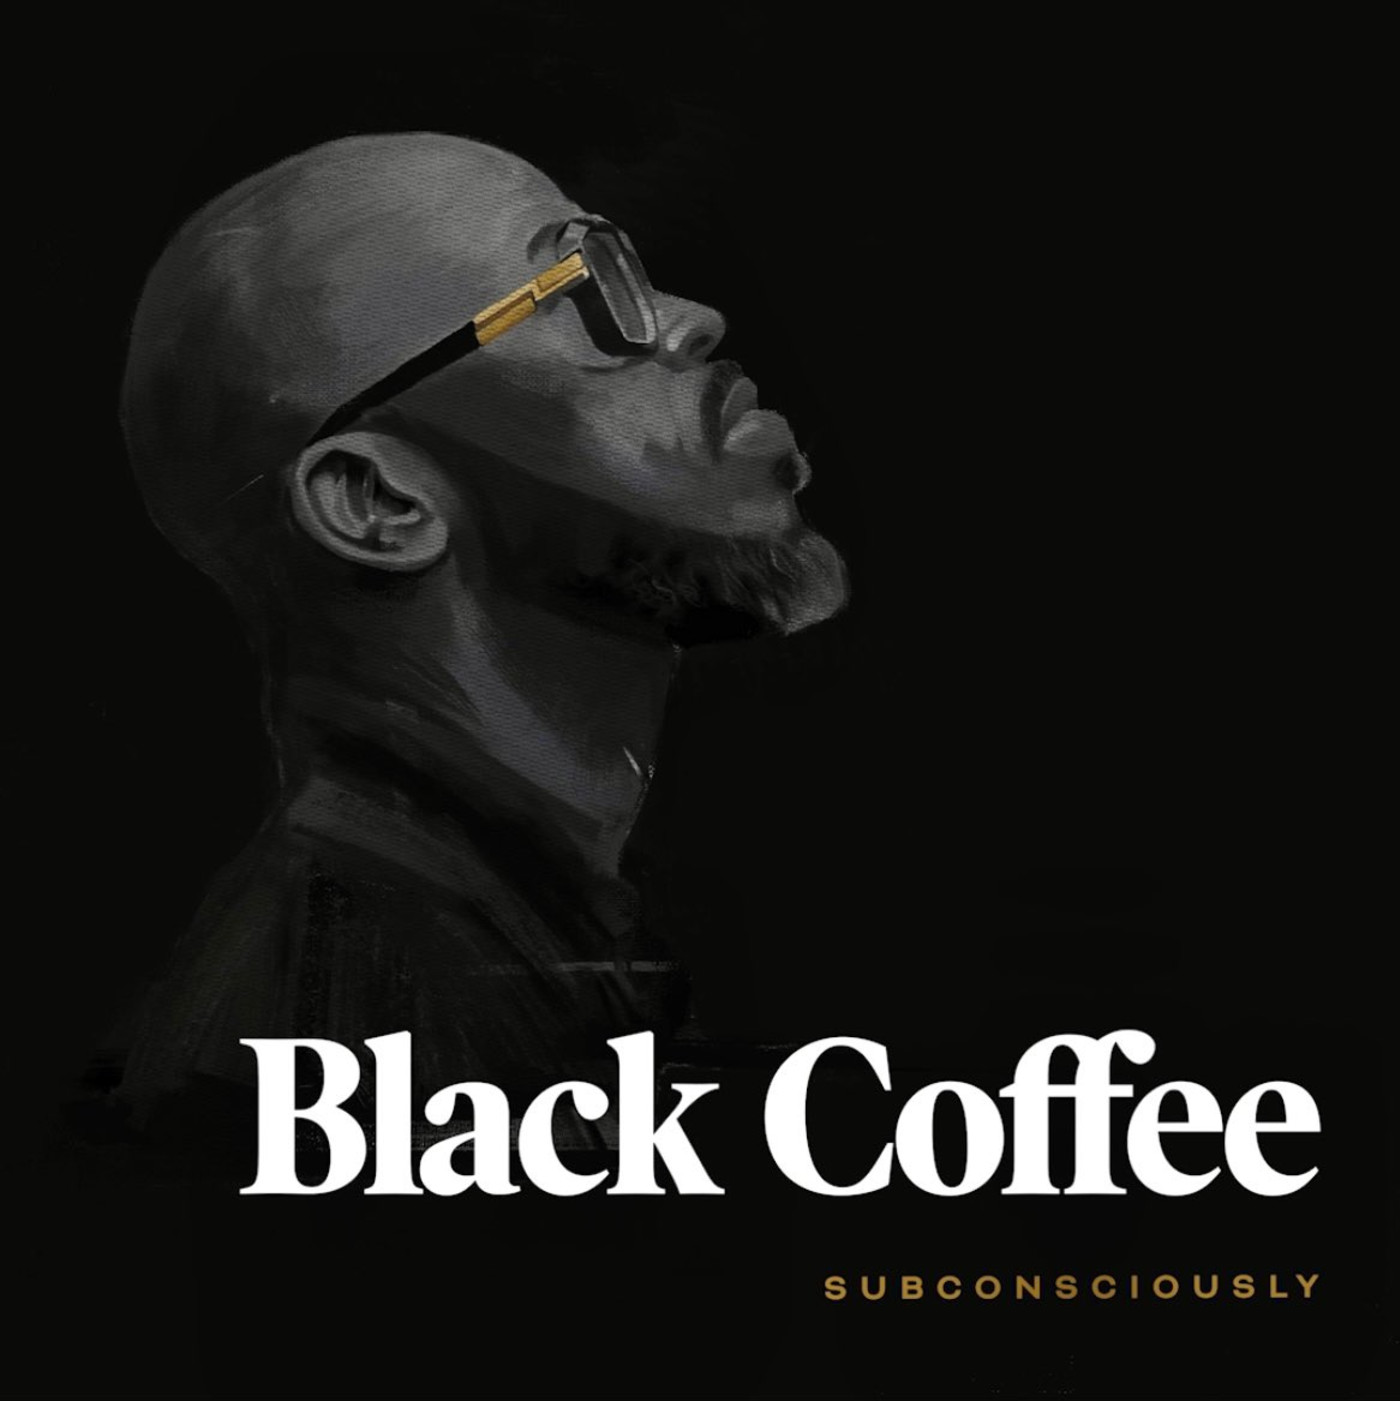 Black Coffee Shares New Album 'Subconsciously' f/ Usher, Pharrell, Diplo & More